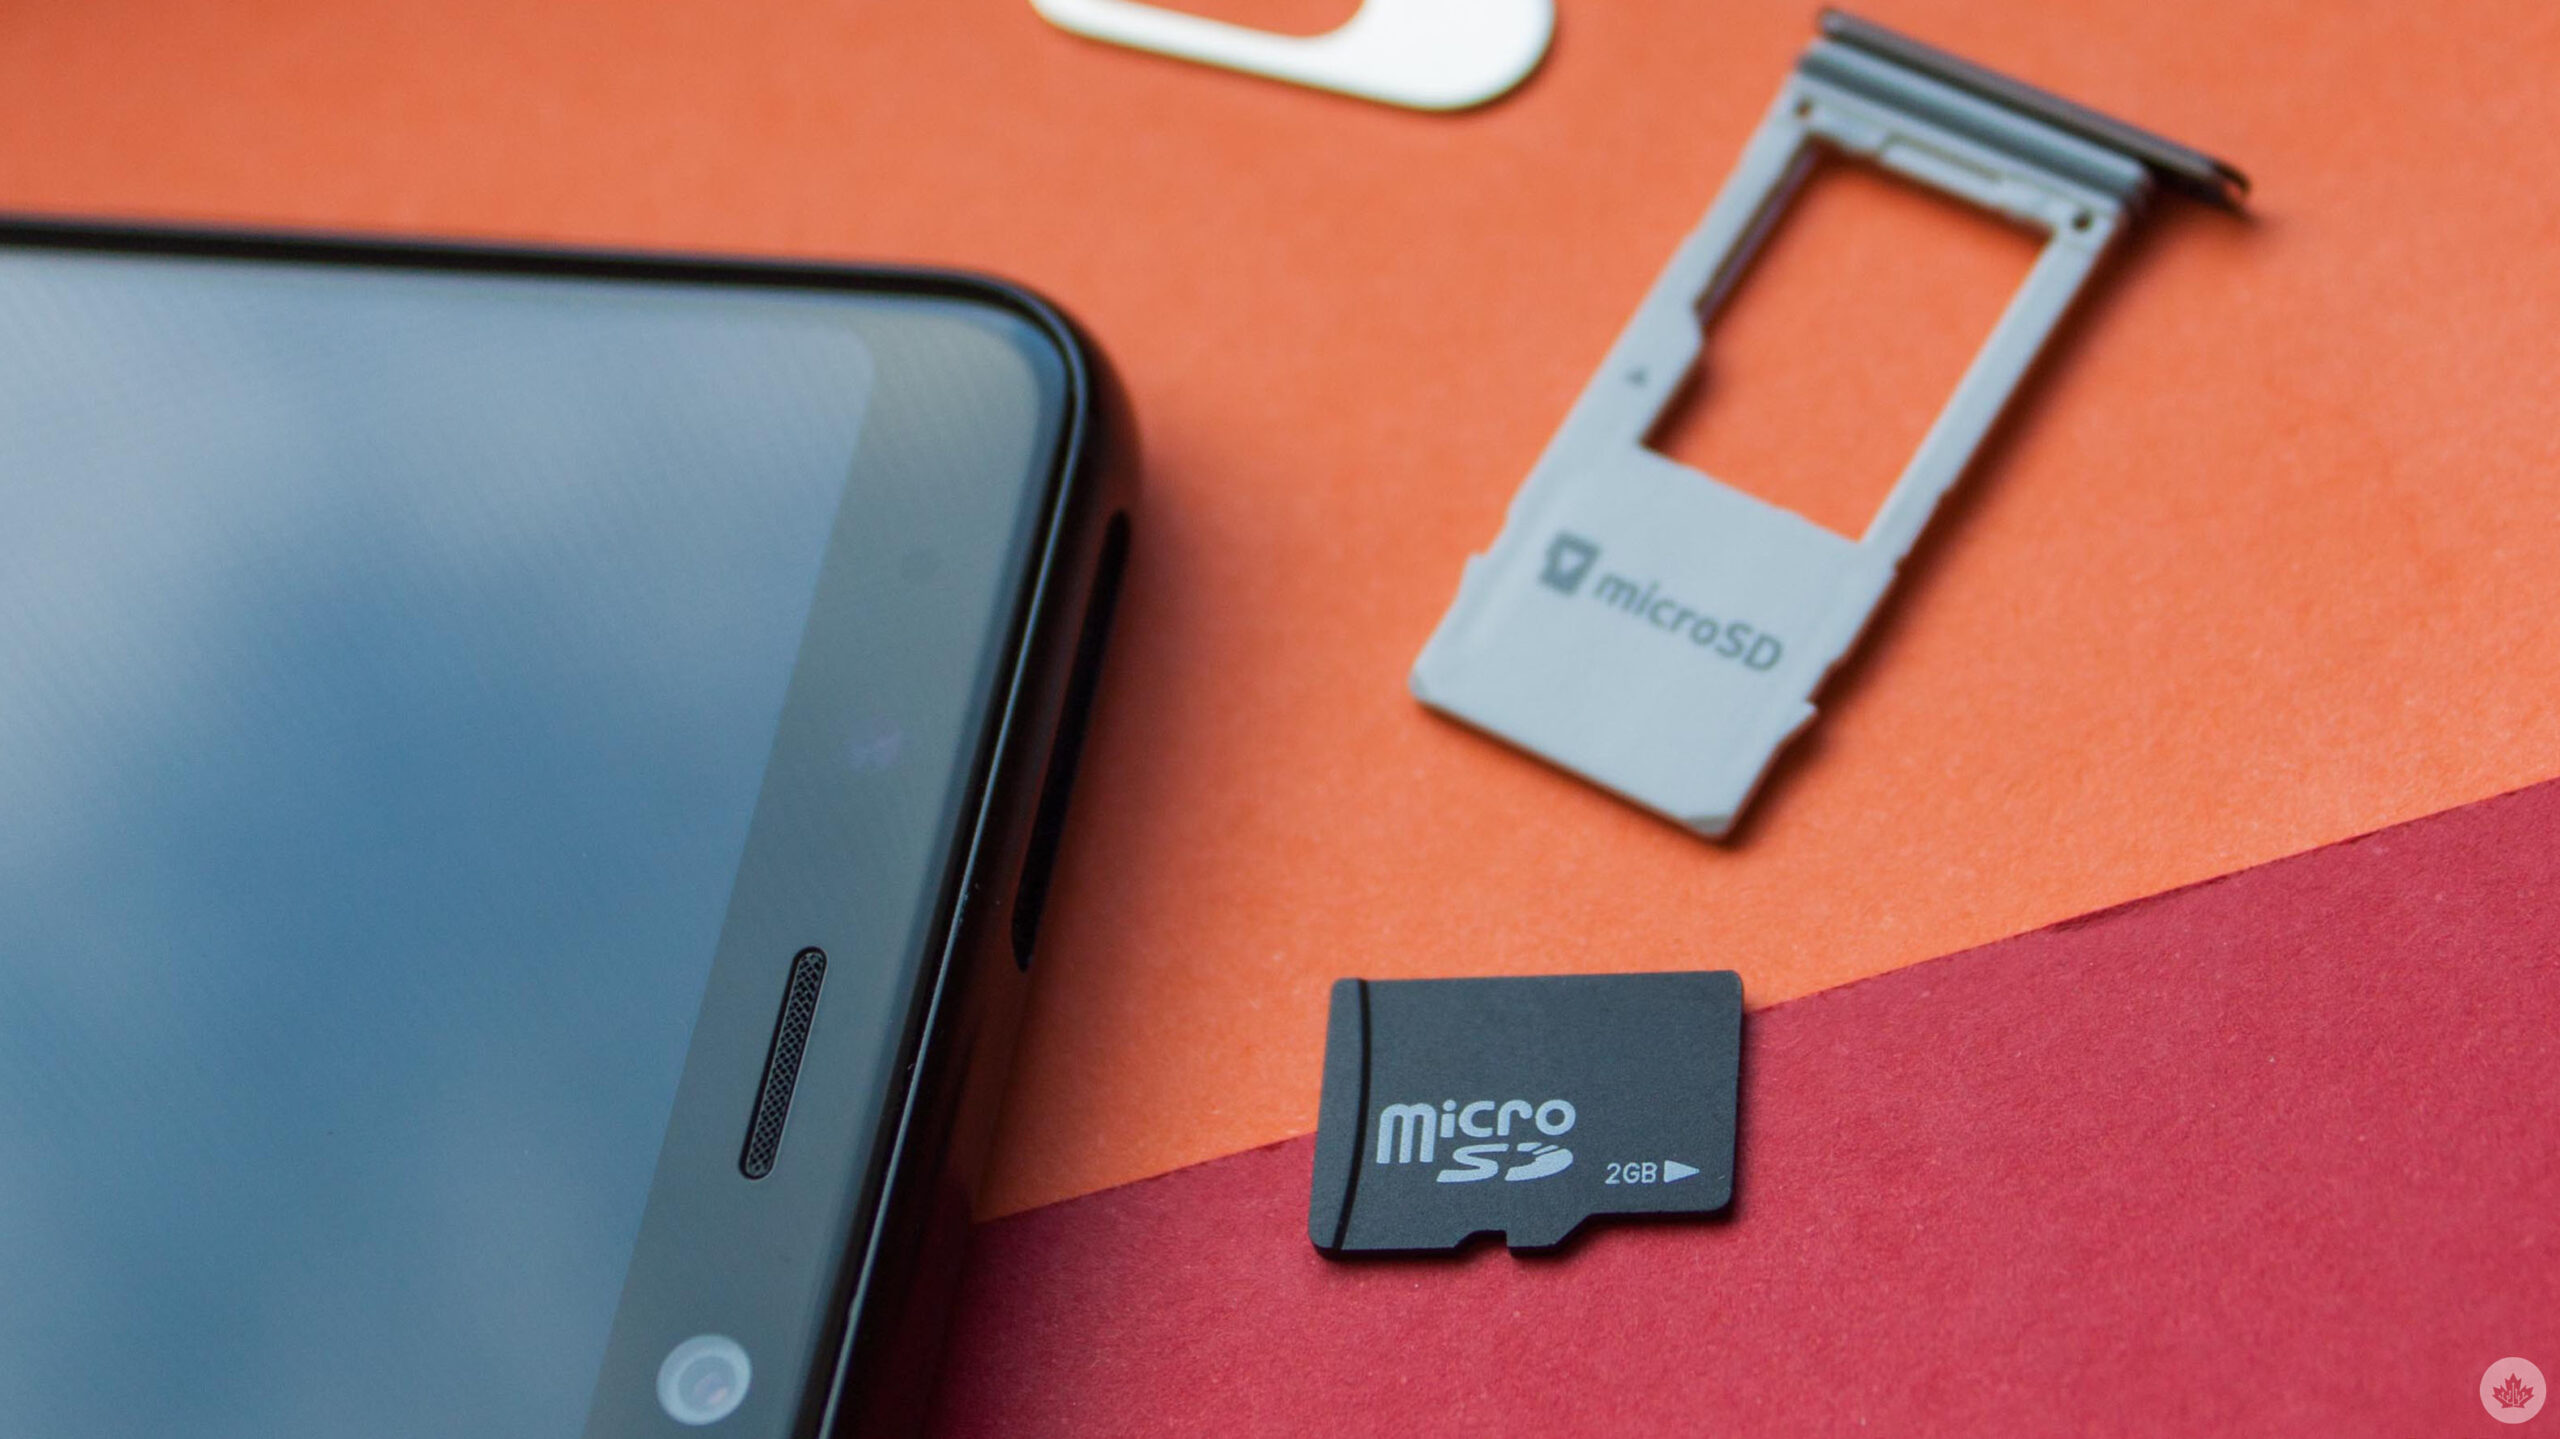 microSD card next to a smartphone